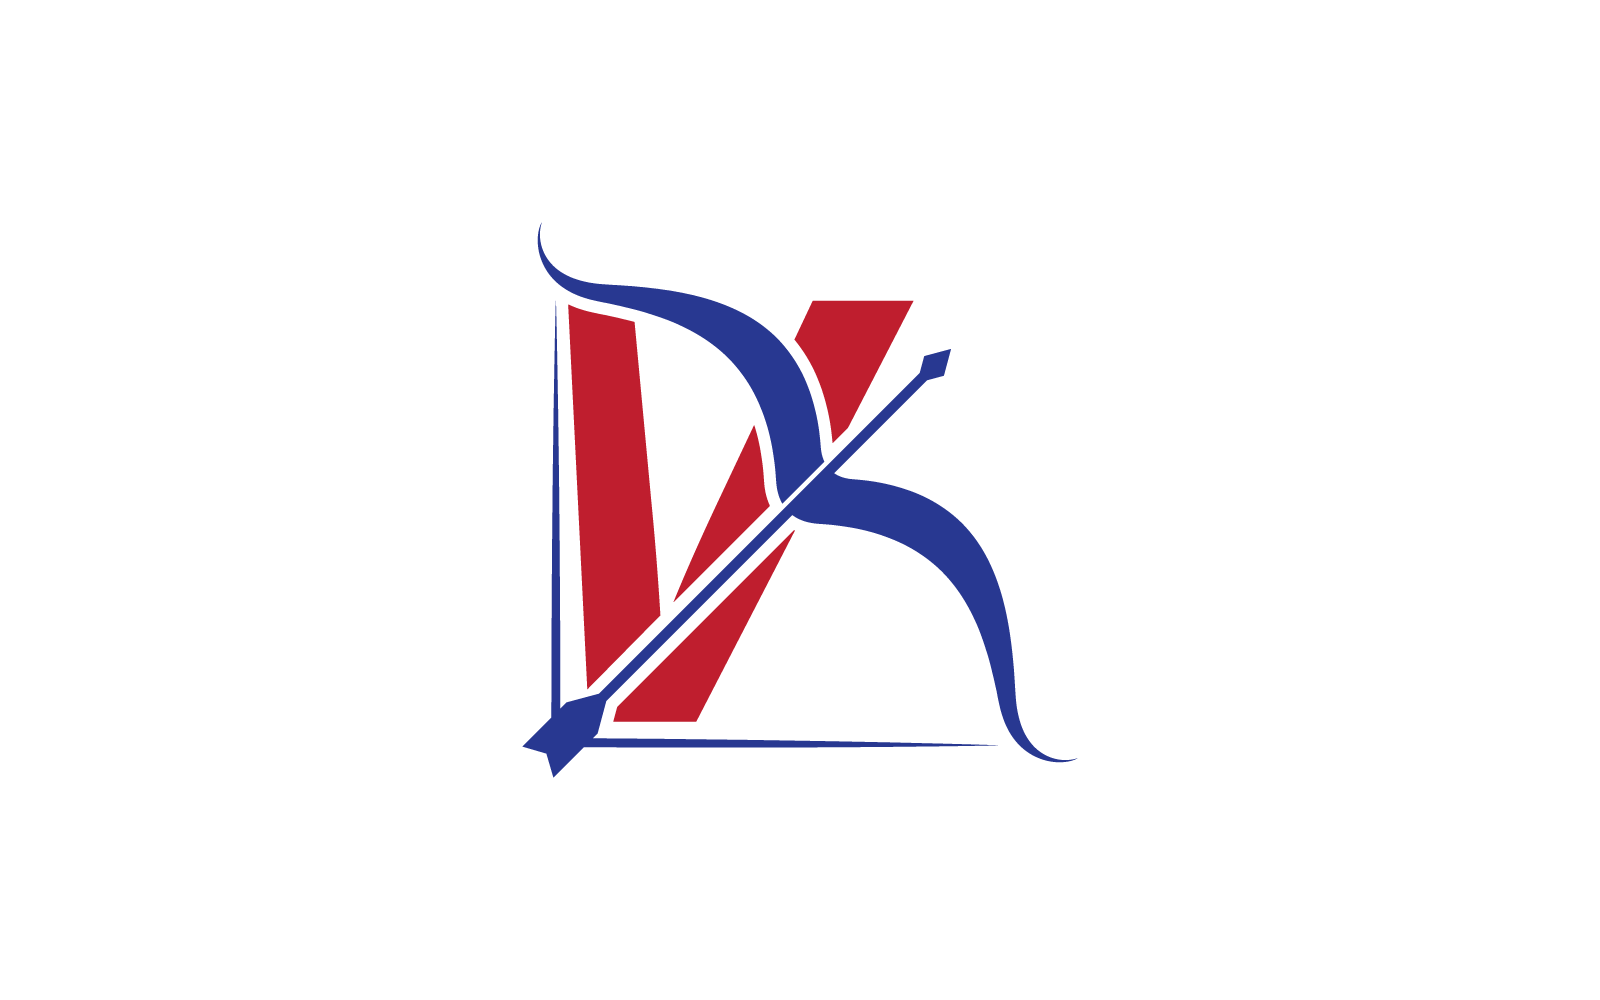 Archery logo With V initial letter vector ilustration flat design